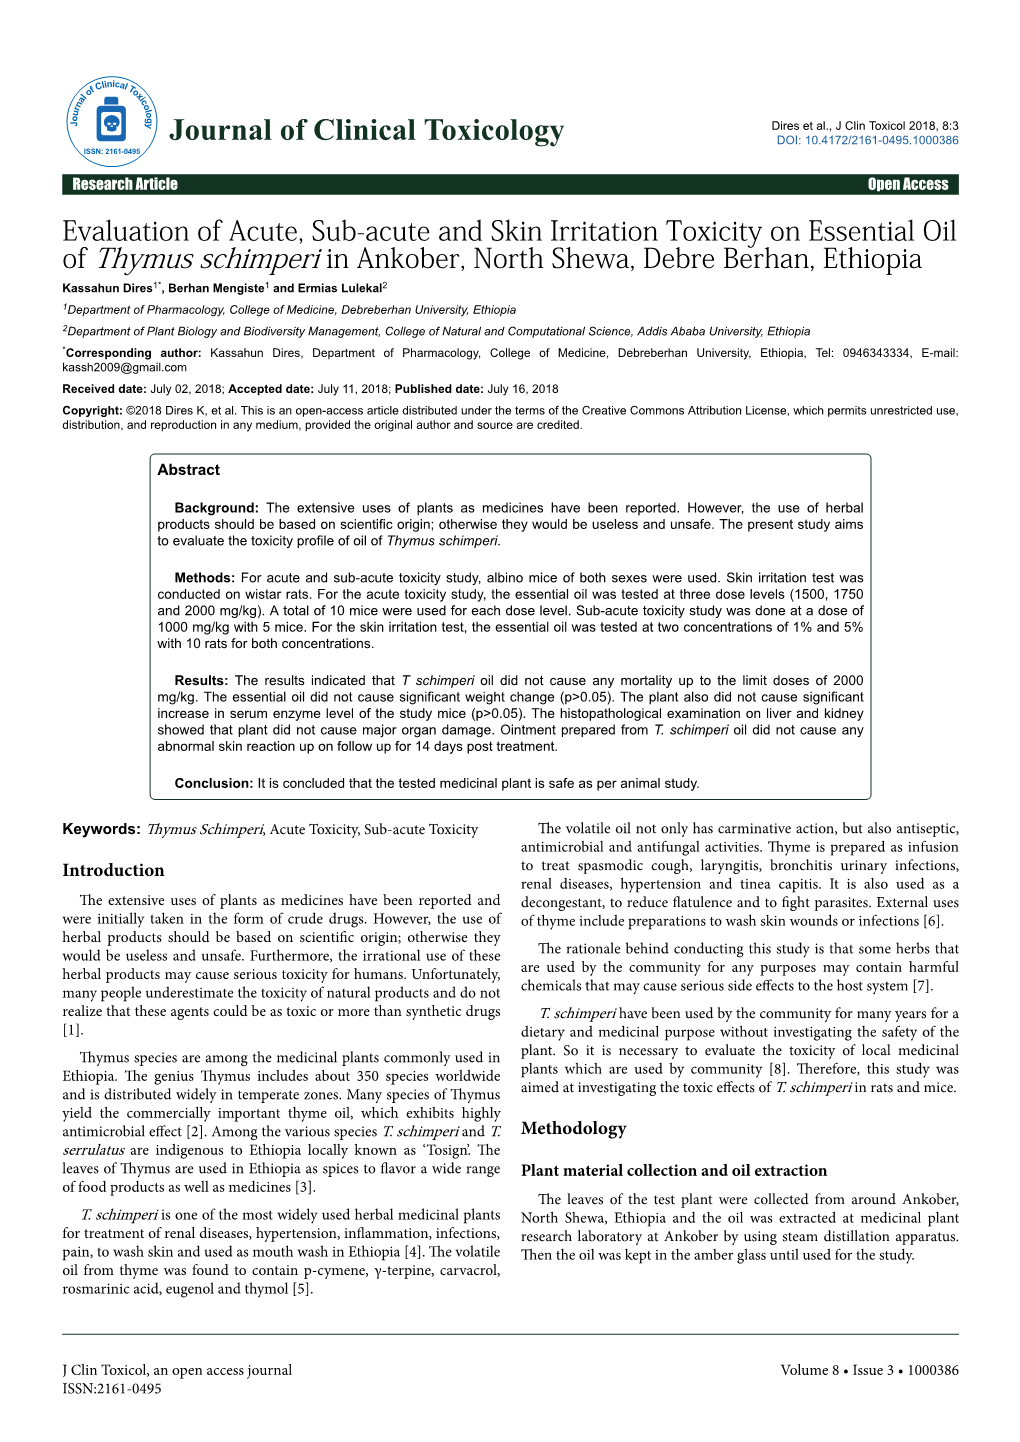 Evaluation of Acute, Sub-Acute and Skin Irritation Toxicity on Essential